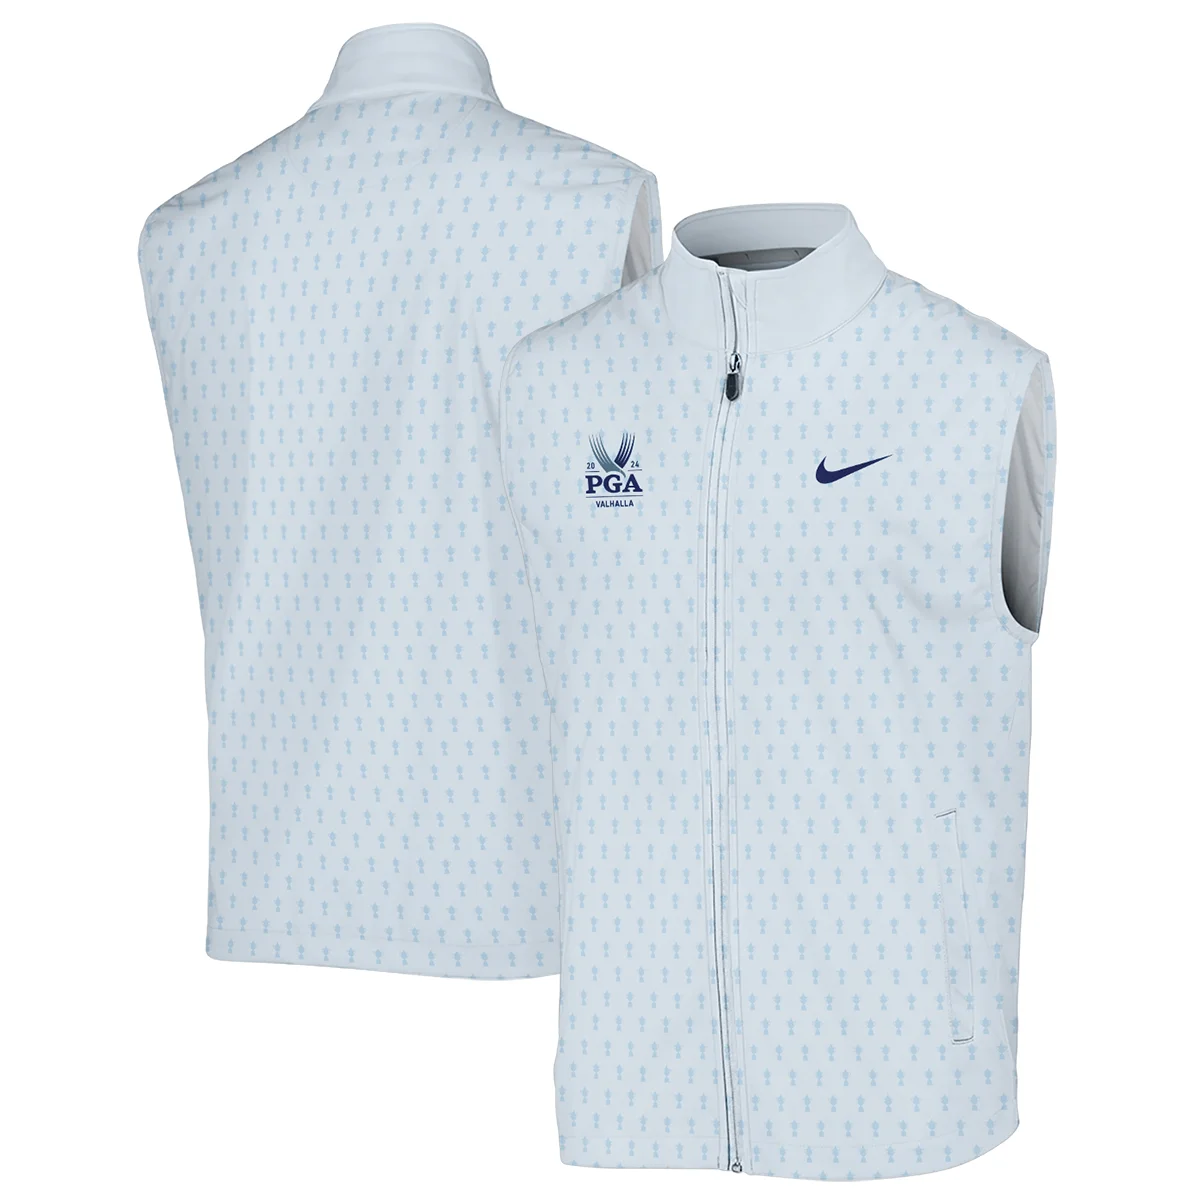 Golf Pattern Cup White Mix Light Blue 2024 PGA Championship Valhalla Nike Vneck Polo Shirt Style Classic Polo Shirt For Men